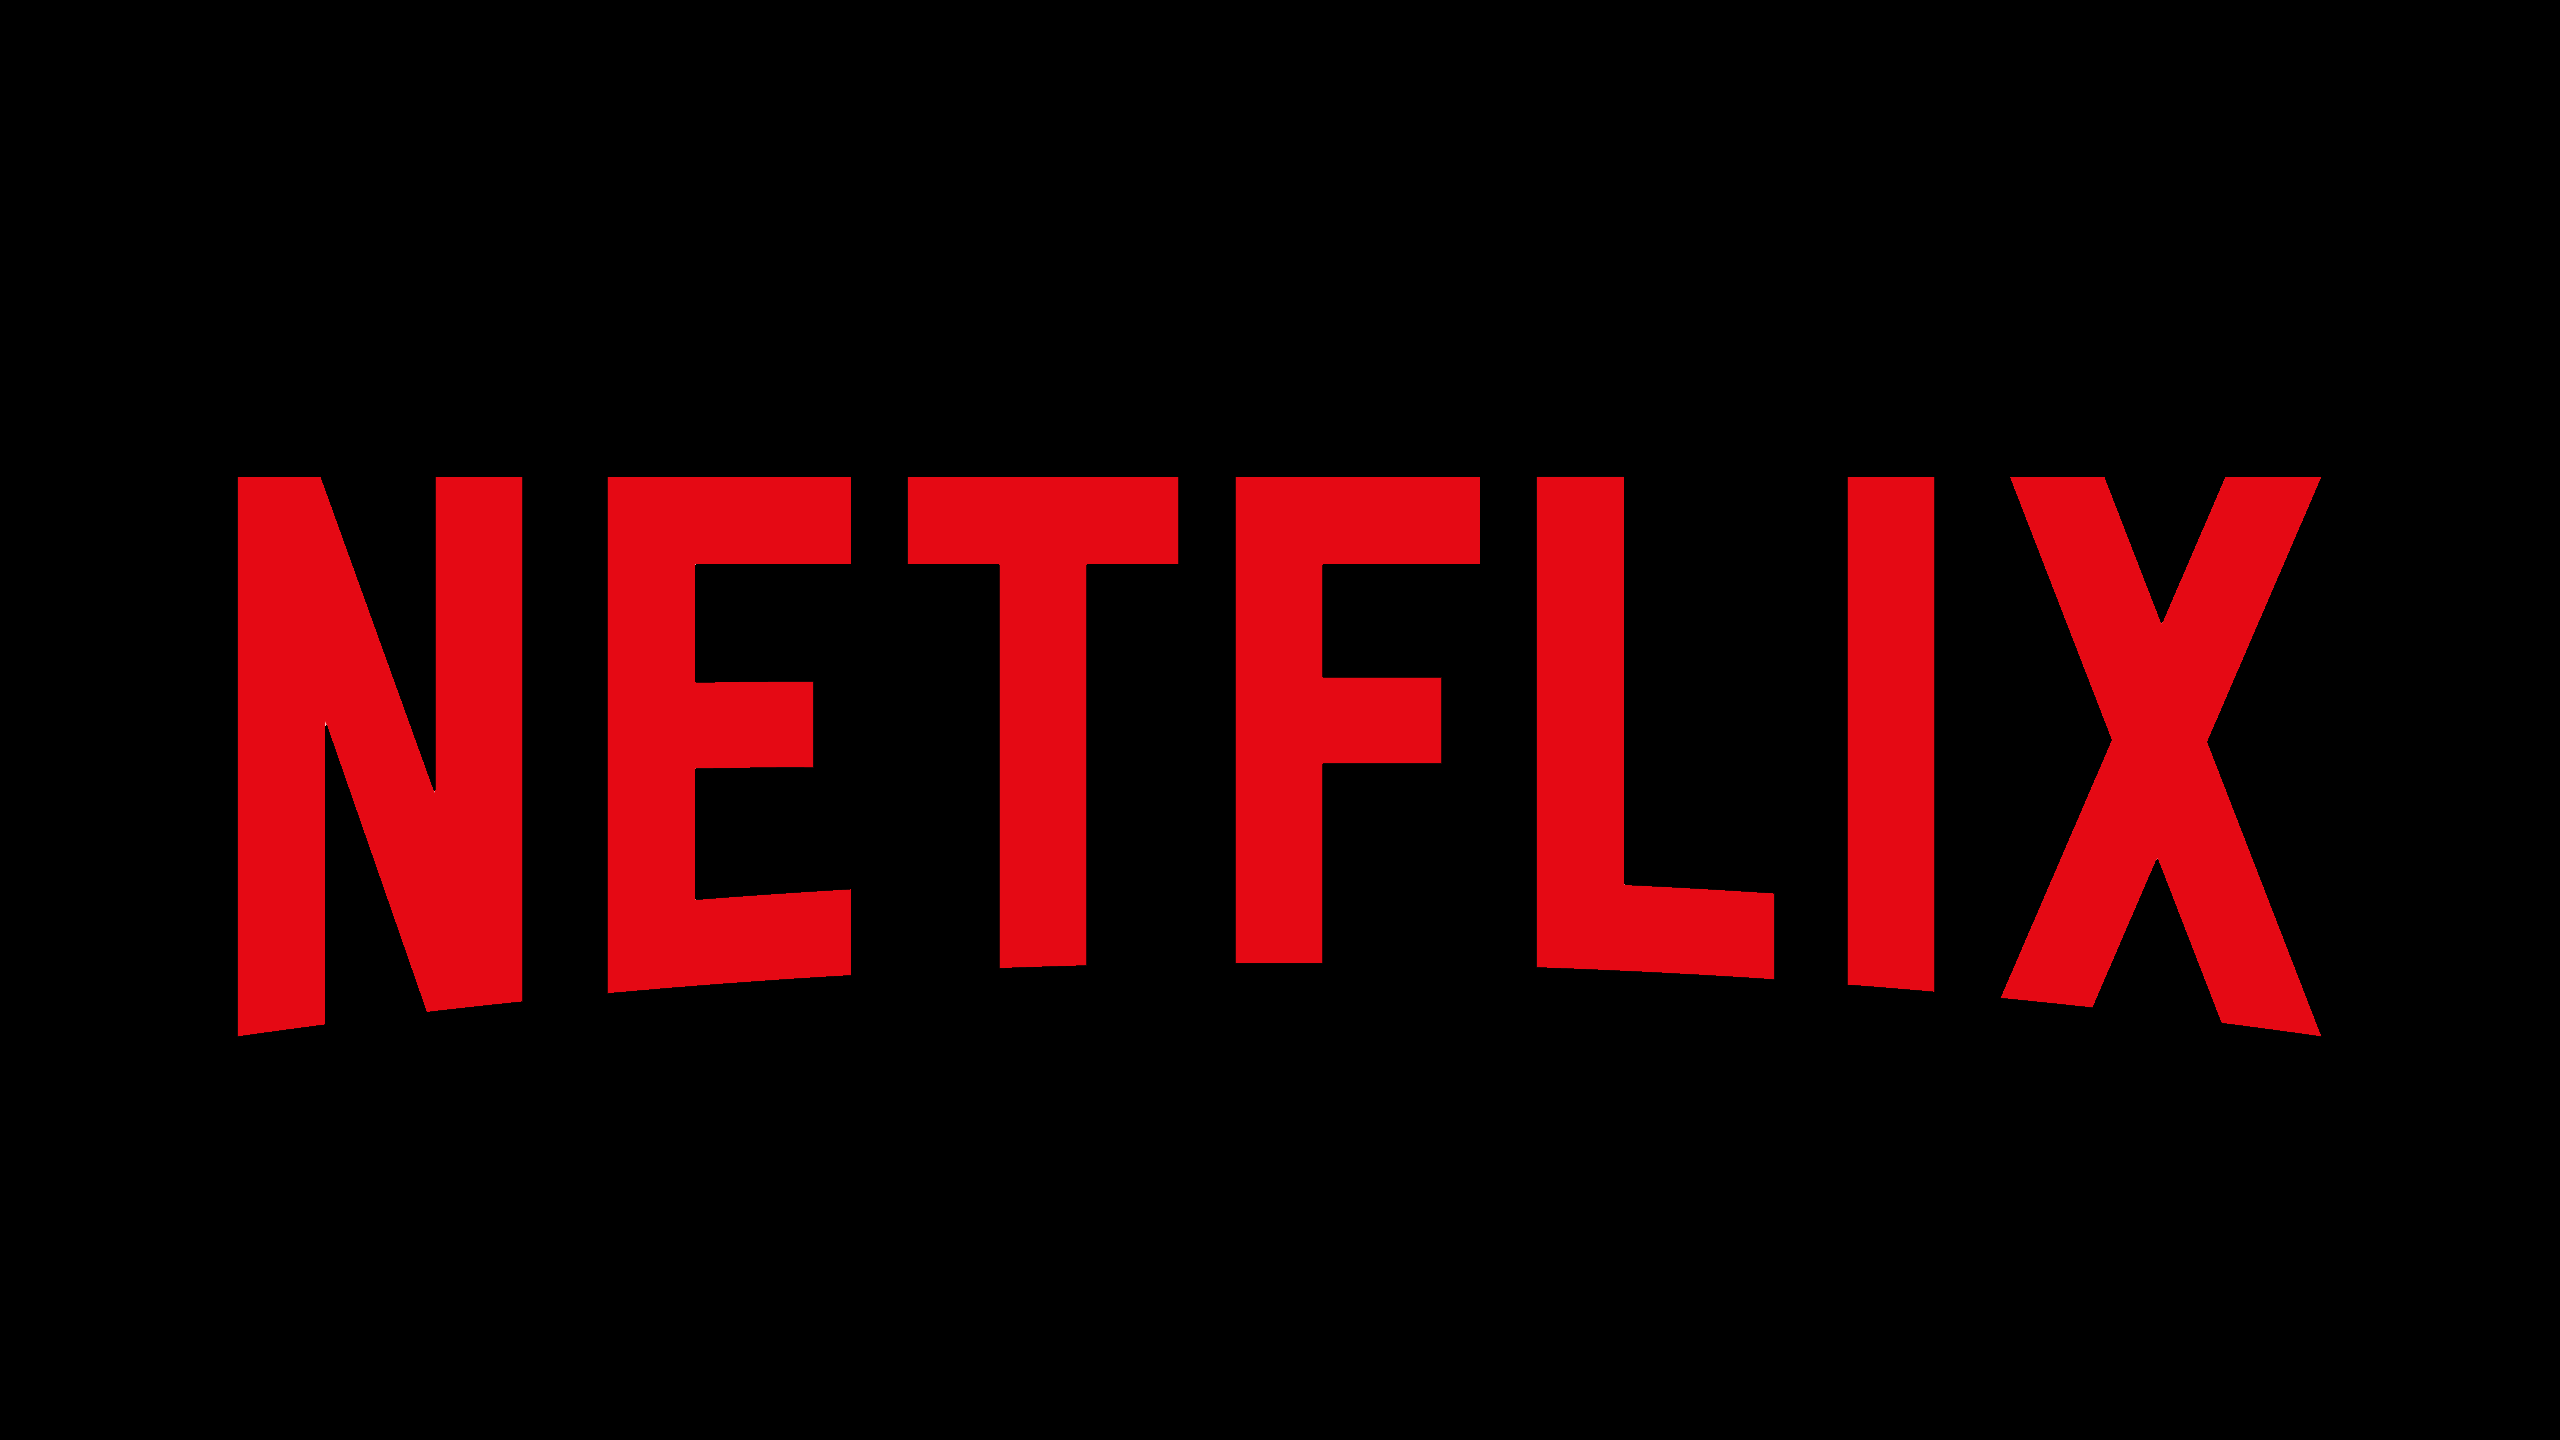 Netflix Bedava İzleme Hilesi İndir – Ücretsiz Netflix İzleme Hilesi